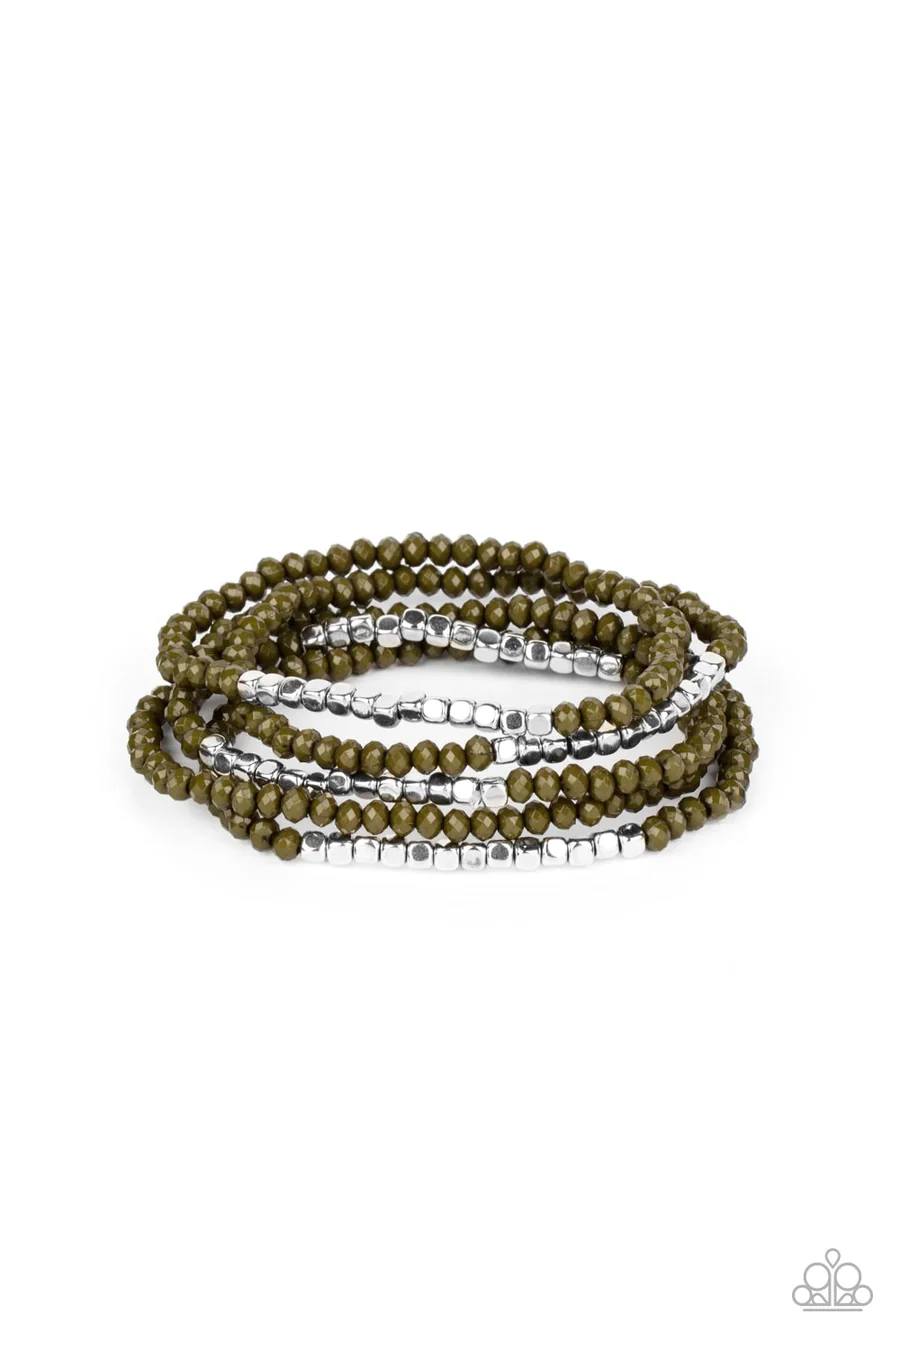 Tulum Trek - Green and Silver Bead Petite Stretchy Bracelet Set